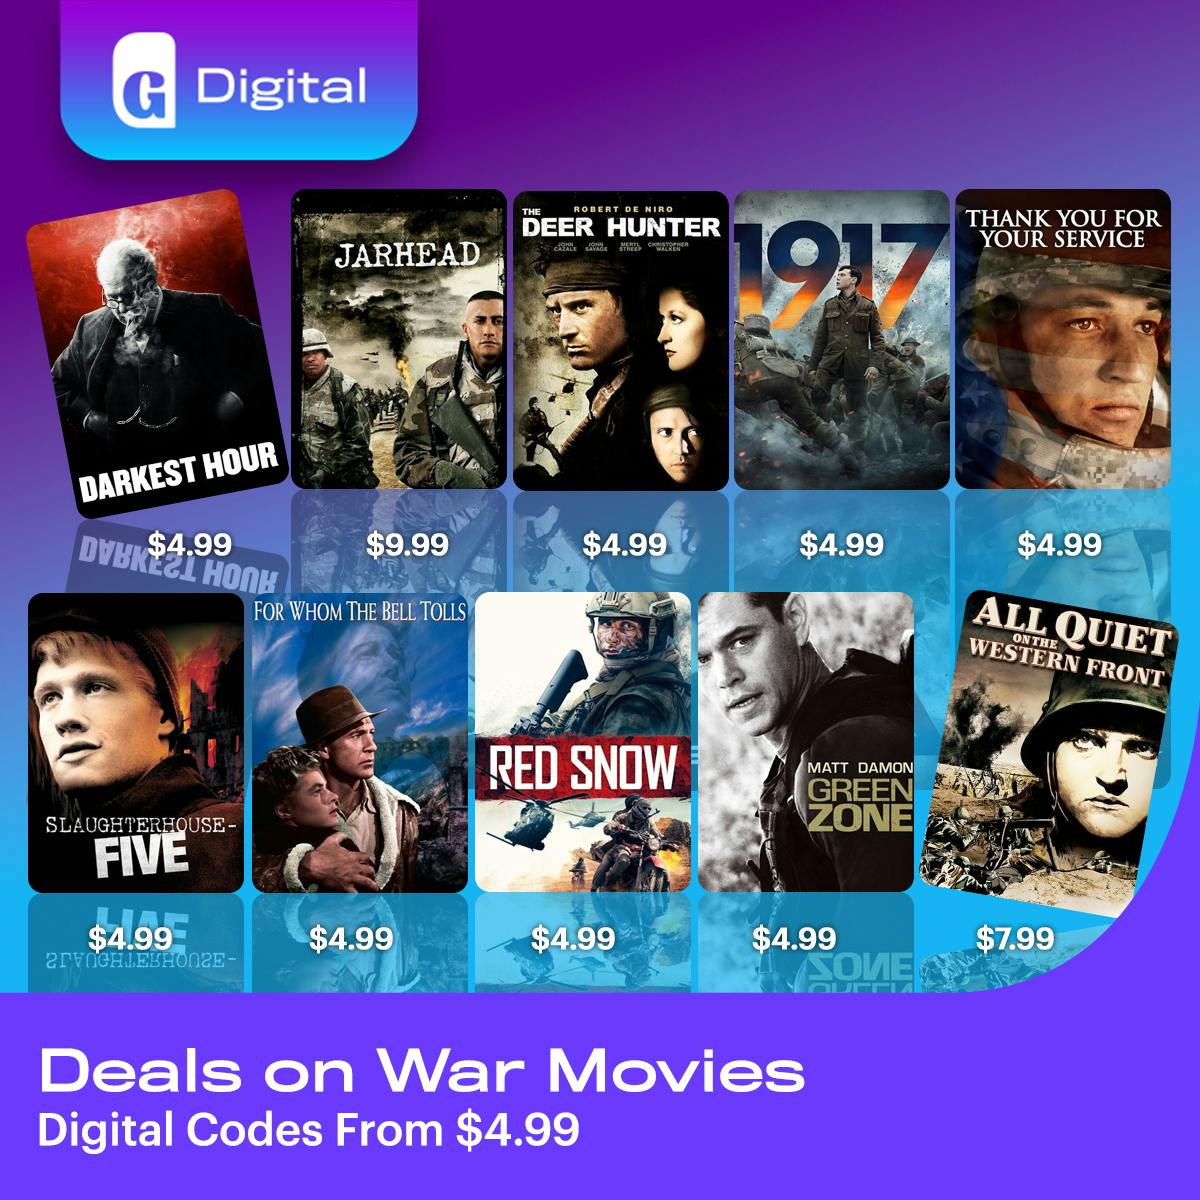 1200x1200 War movies - Digital Code deals